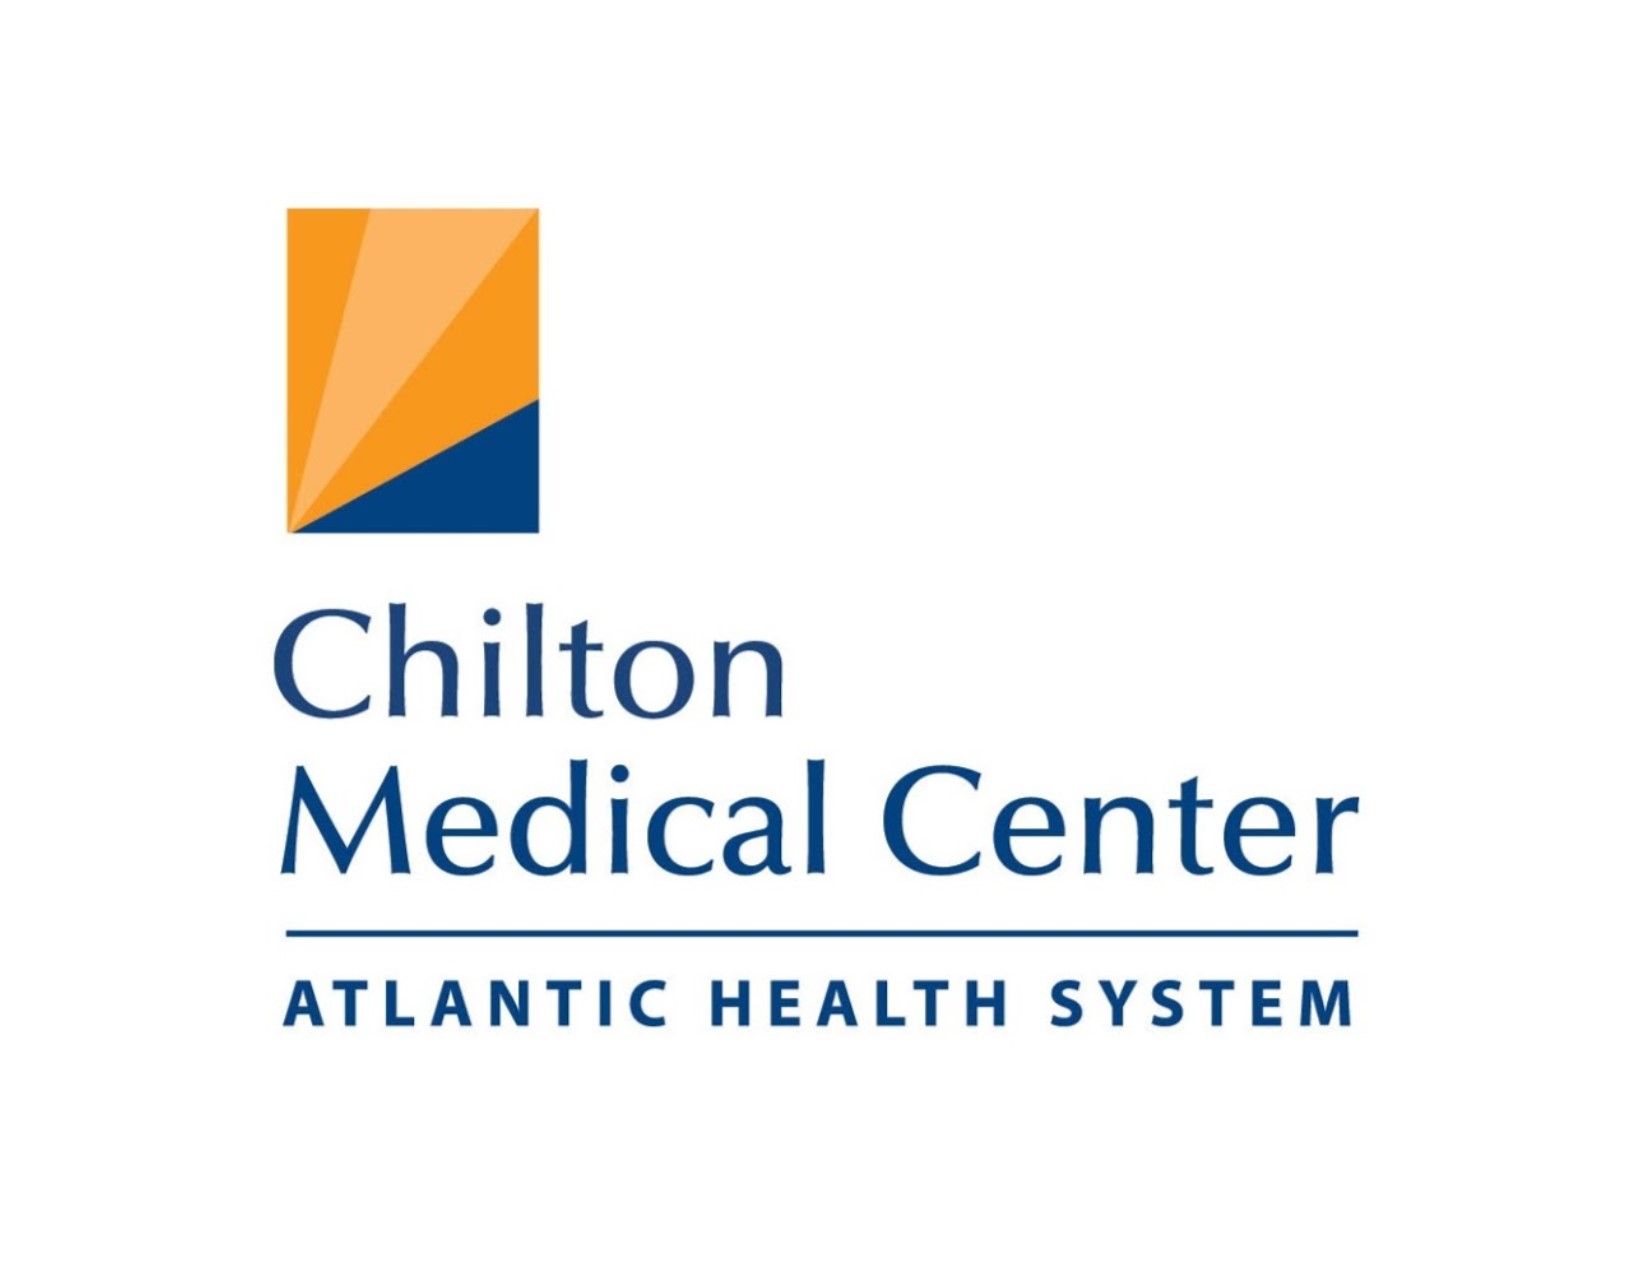 Chilton Medical Center